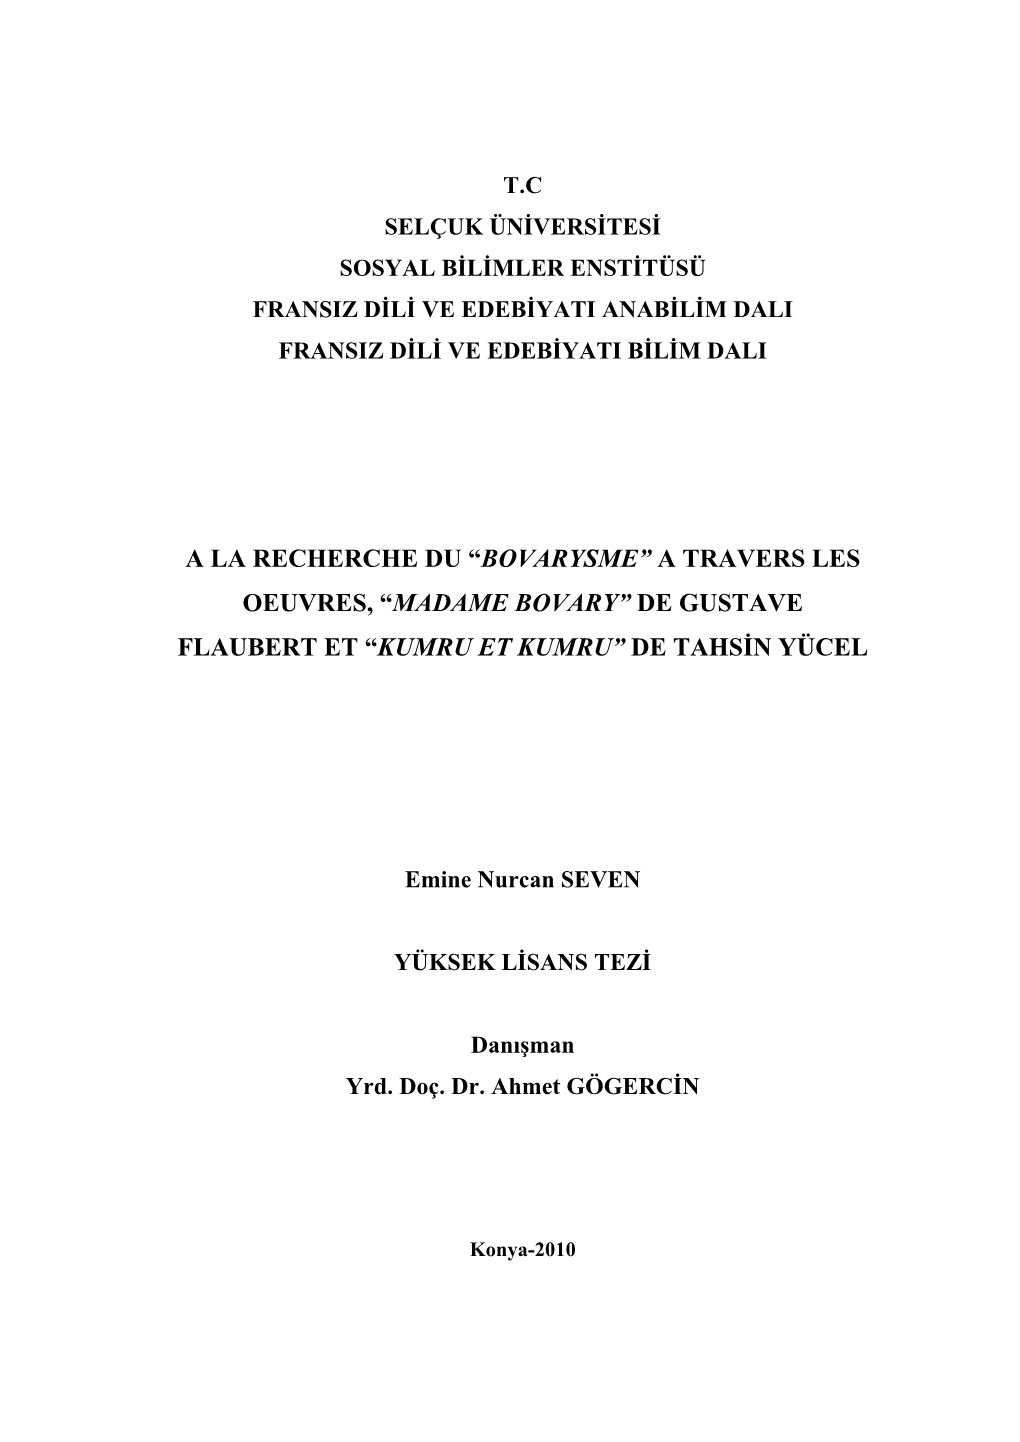 A La Recherche Du “Bovarysme” a Travers Les Oeuvres, “Madame Bovary” De Gustave Flaubert Et “Kumru Et Kumru” De Tahsin Yücel